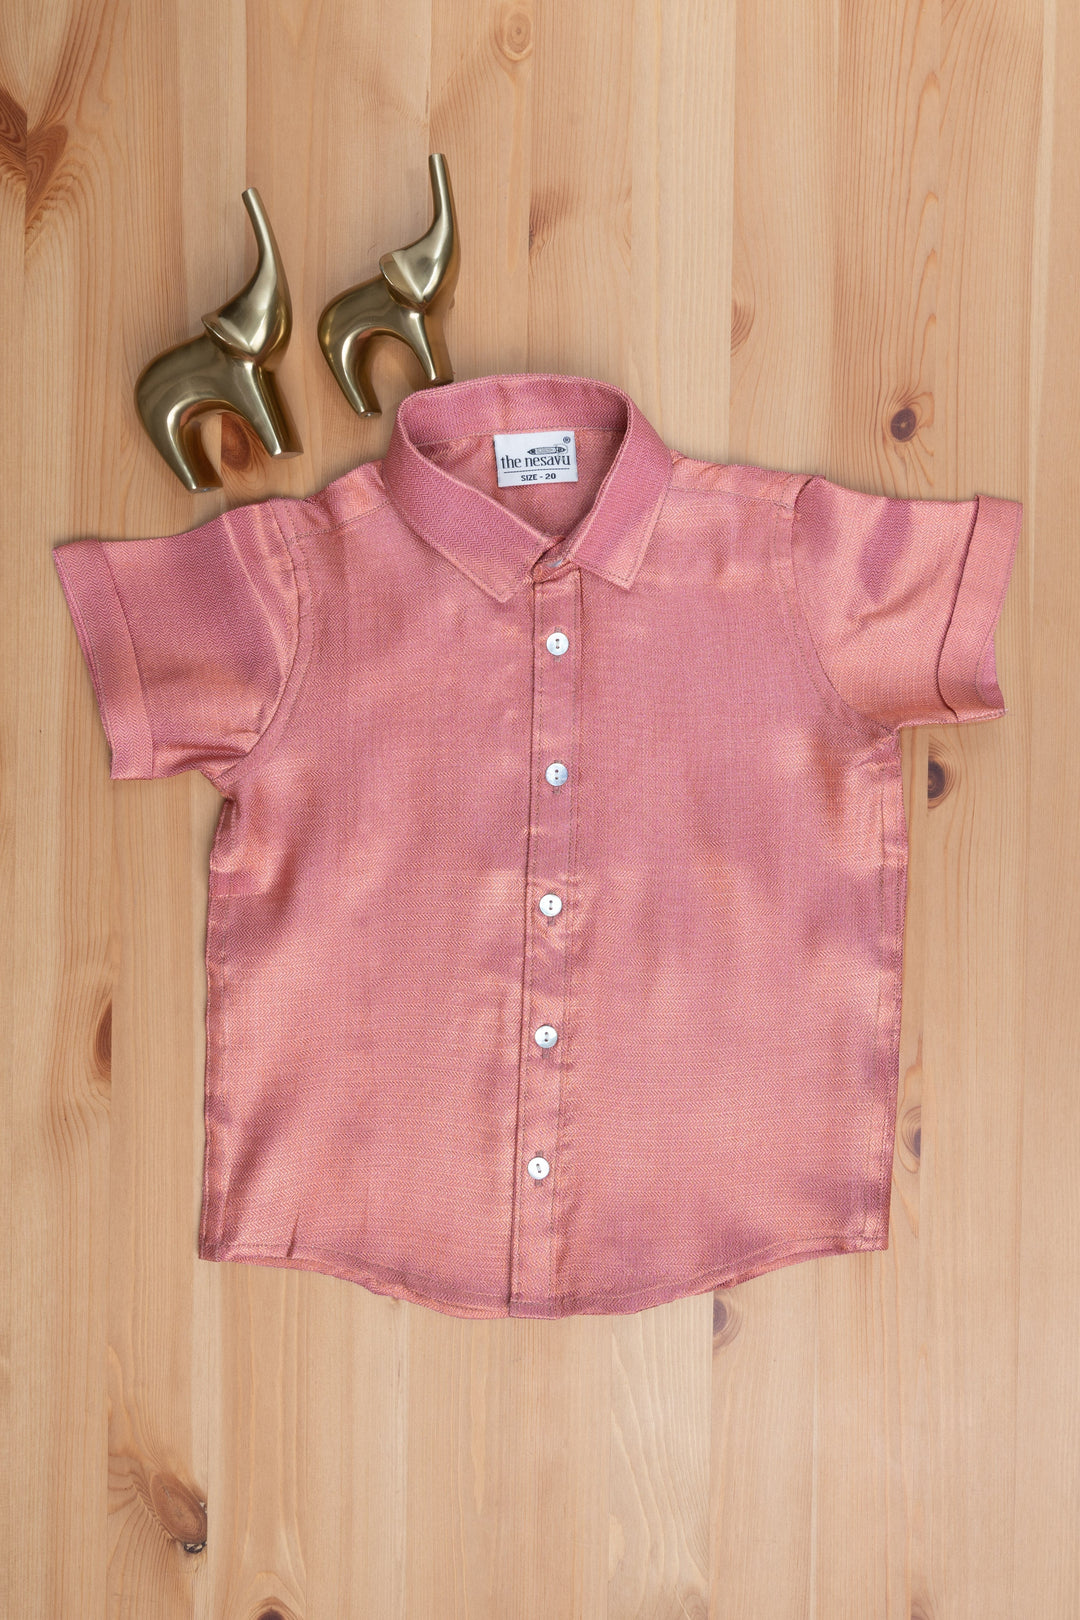 The Nesavu Boys Silk Shirt Baby Pink Delight Little Maharaja Pattu Silk Shirt Nesavu 14 (6M) / Salmon / Silk BS033-14 "The Nesavu's Mini Maharaja Collection: Boys' Shirts for Newborns to 6-Year-Olds"